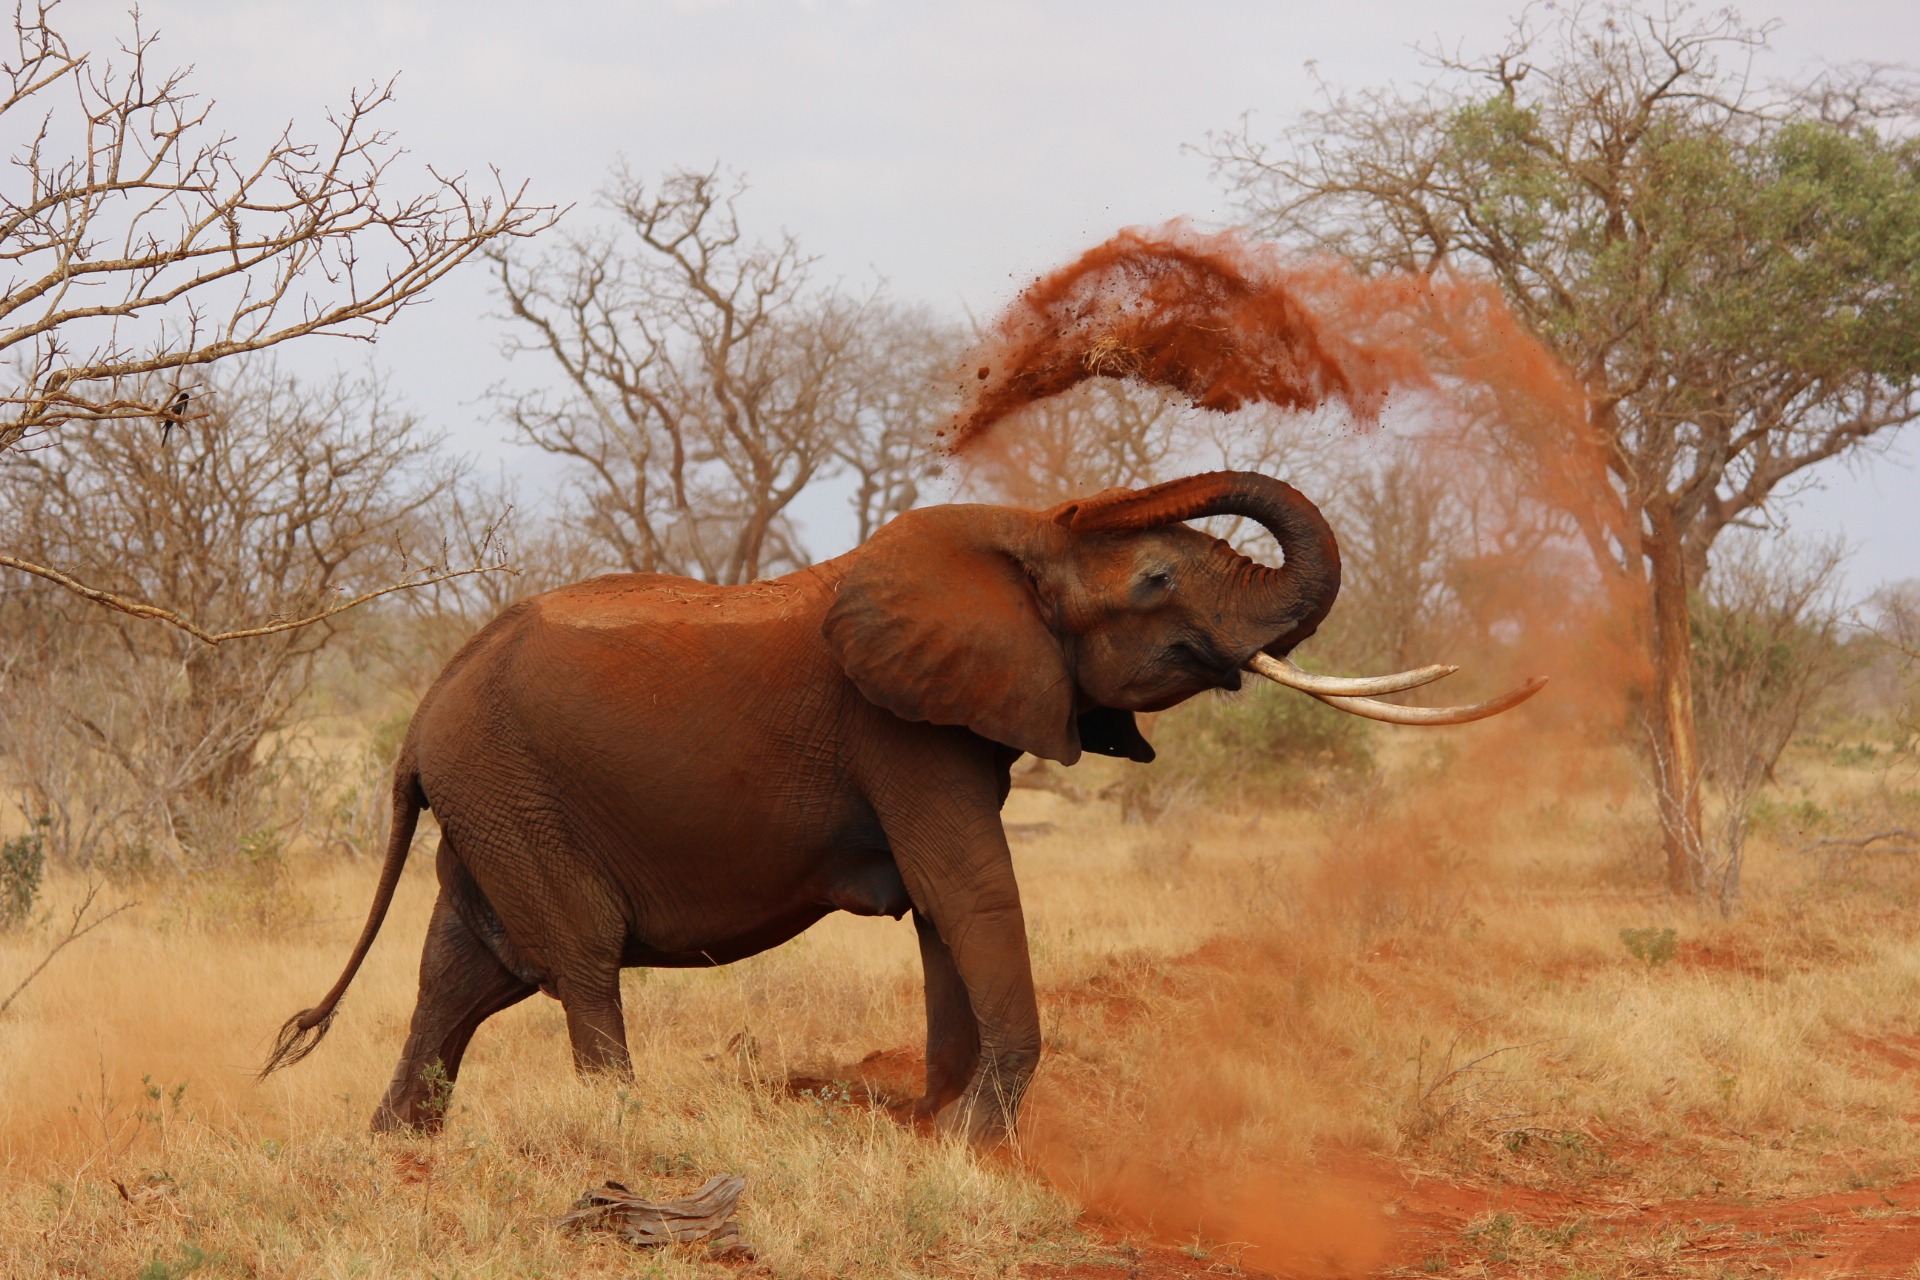 Elephant in Kenya Africa by Kirsi Kataniemi